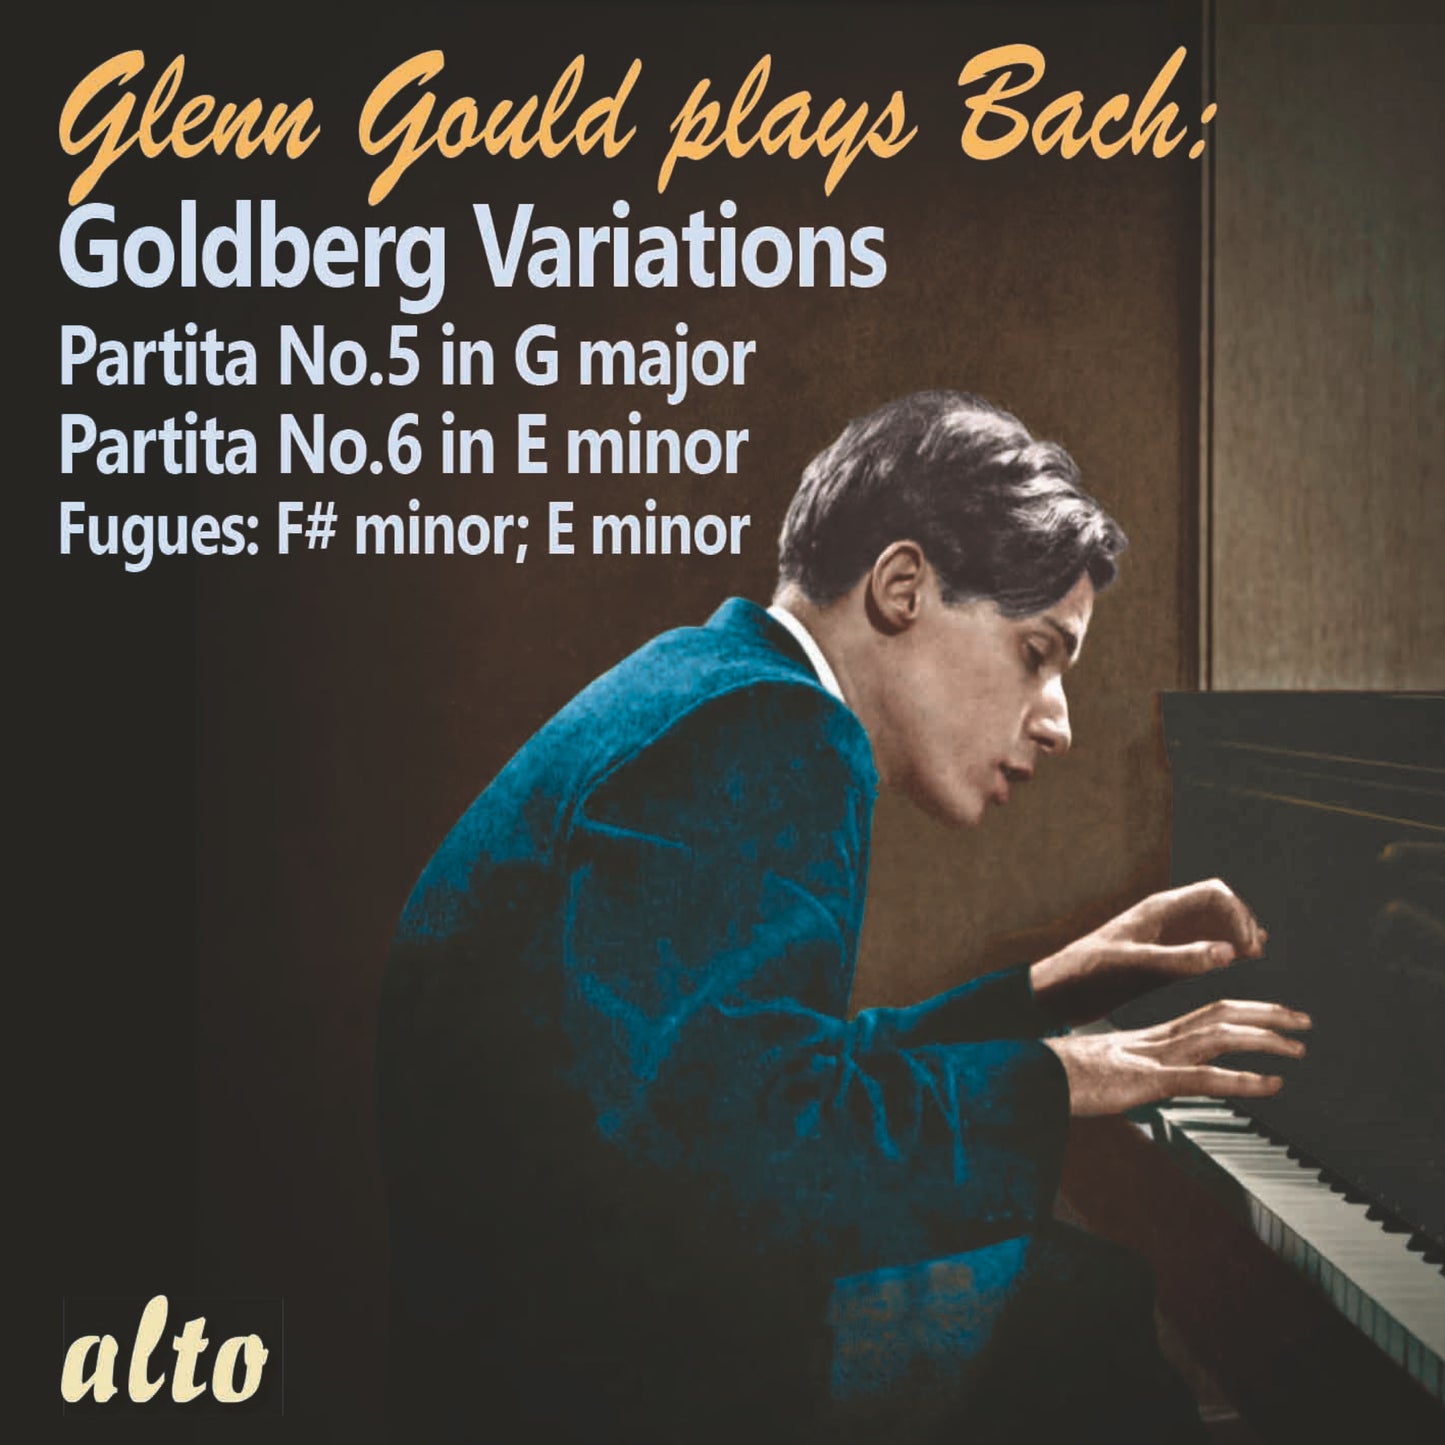 GLENN GOULD PLAYS BACH - GOLDBERG VARIATIONS (1955); PARTITAS, FUGUES